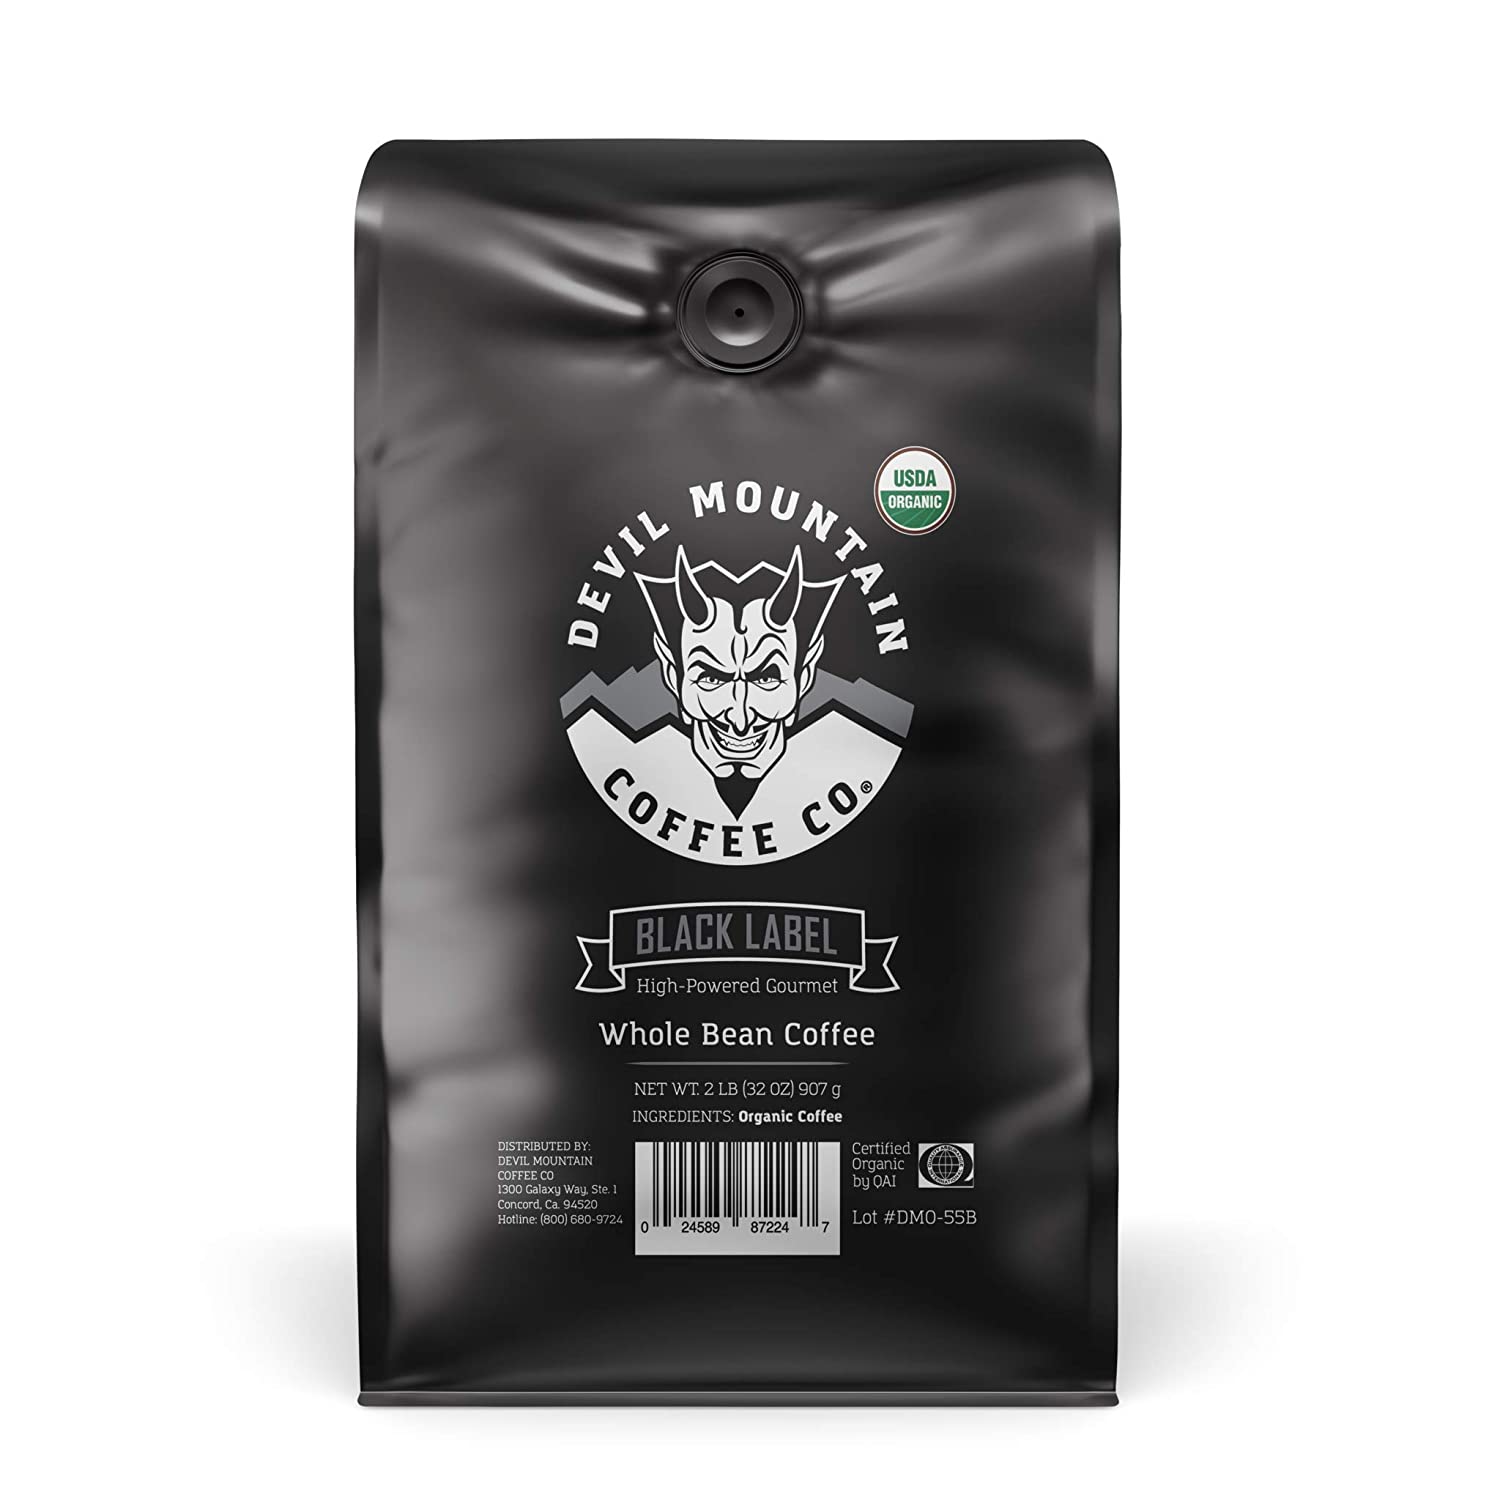 Black Label Devil Mountain Coffee